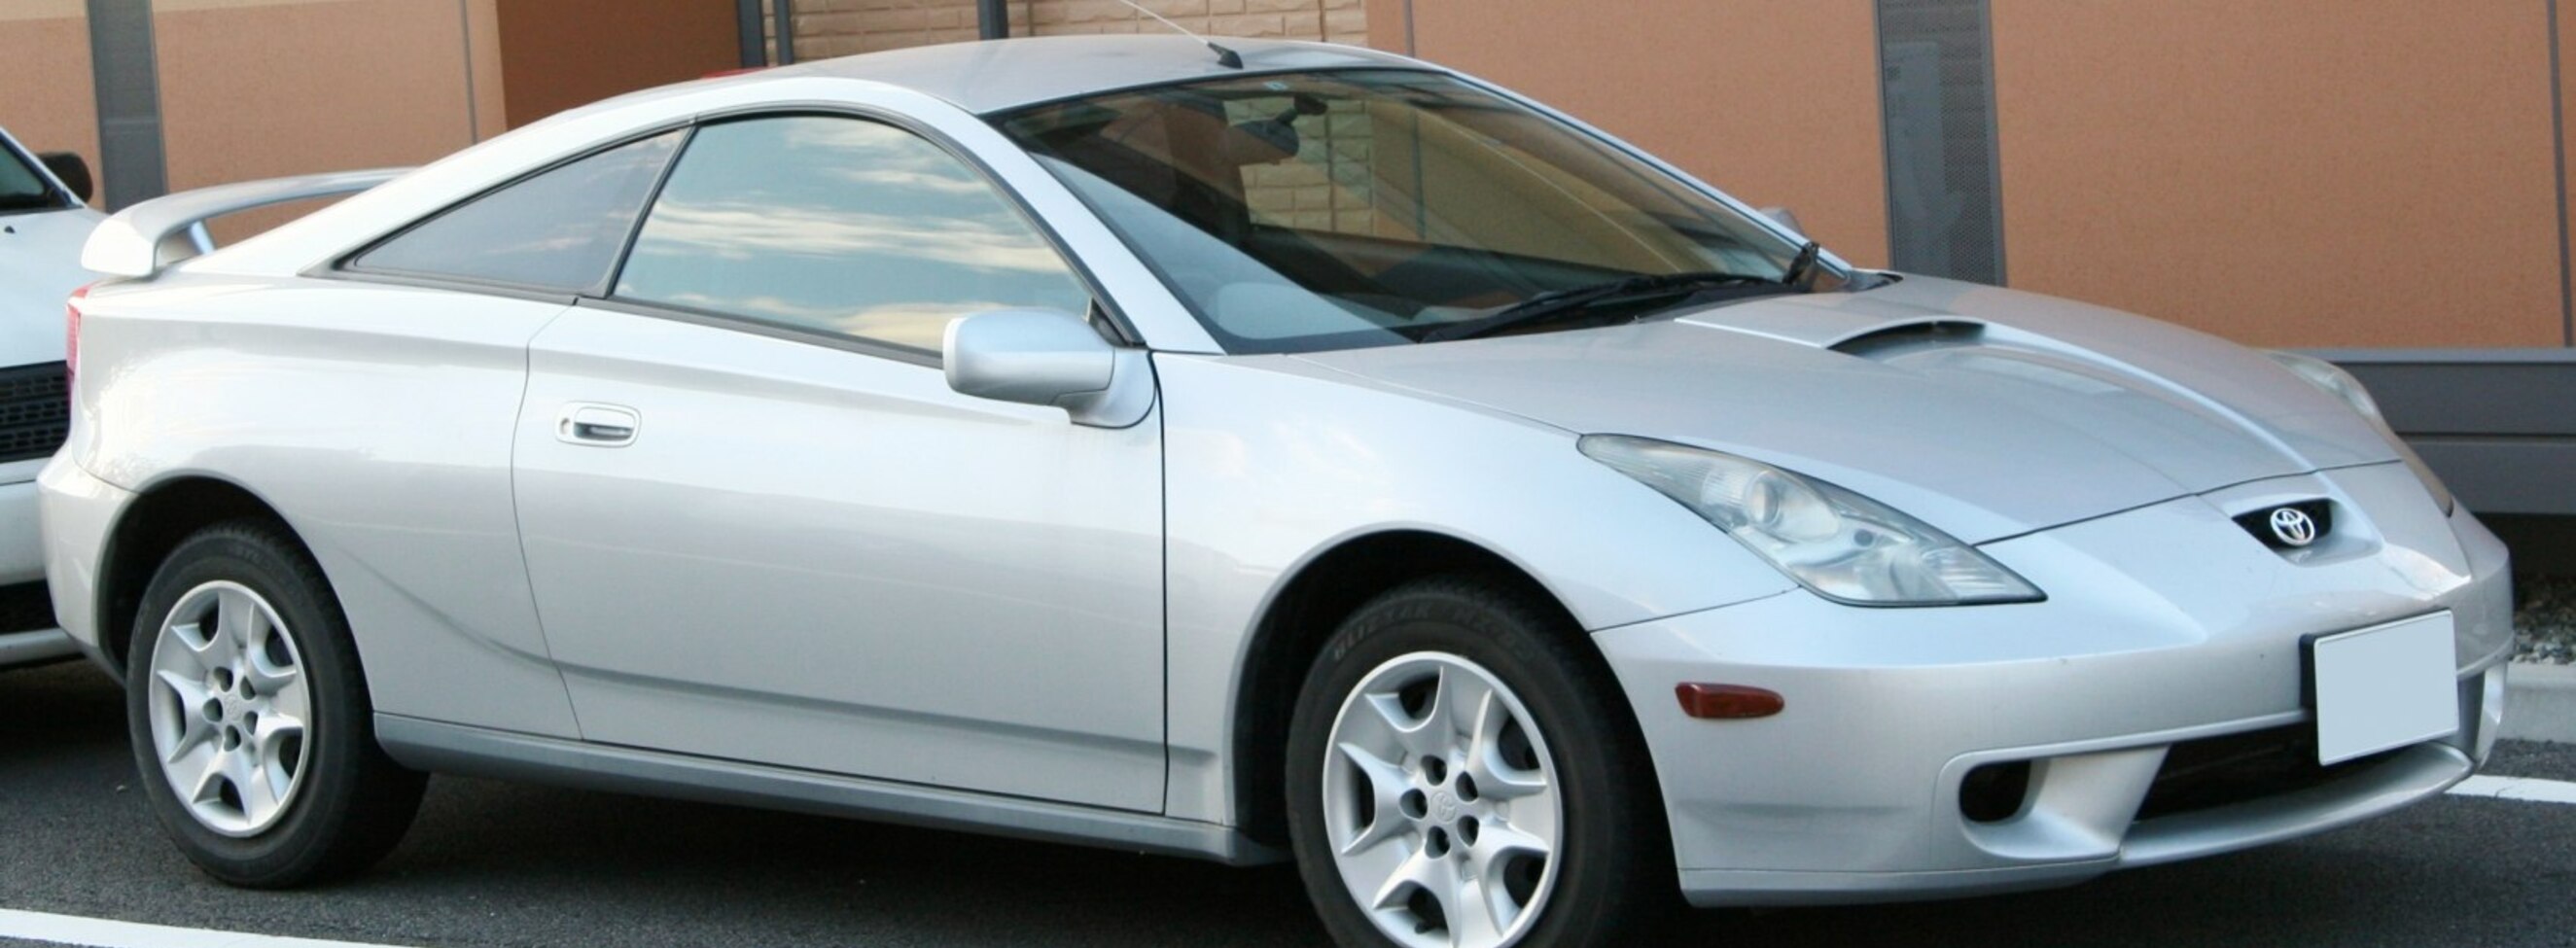 Toyota Celica (T23) 1.8 VVTL-I T-Sport (192 Hp) 2000, 2001, 2002 